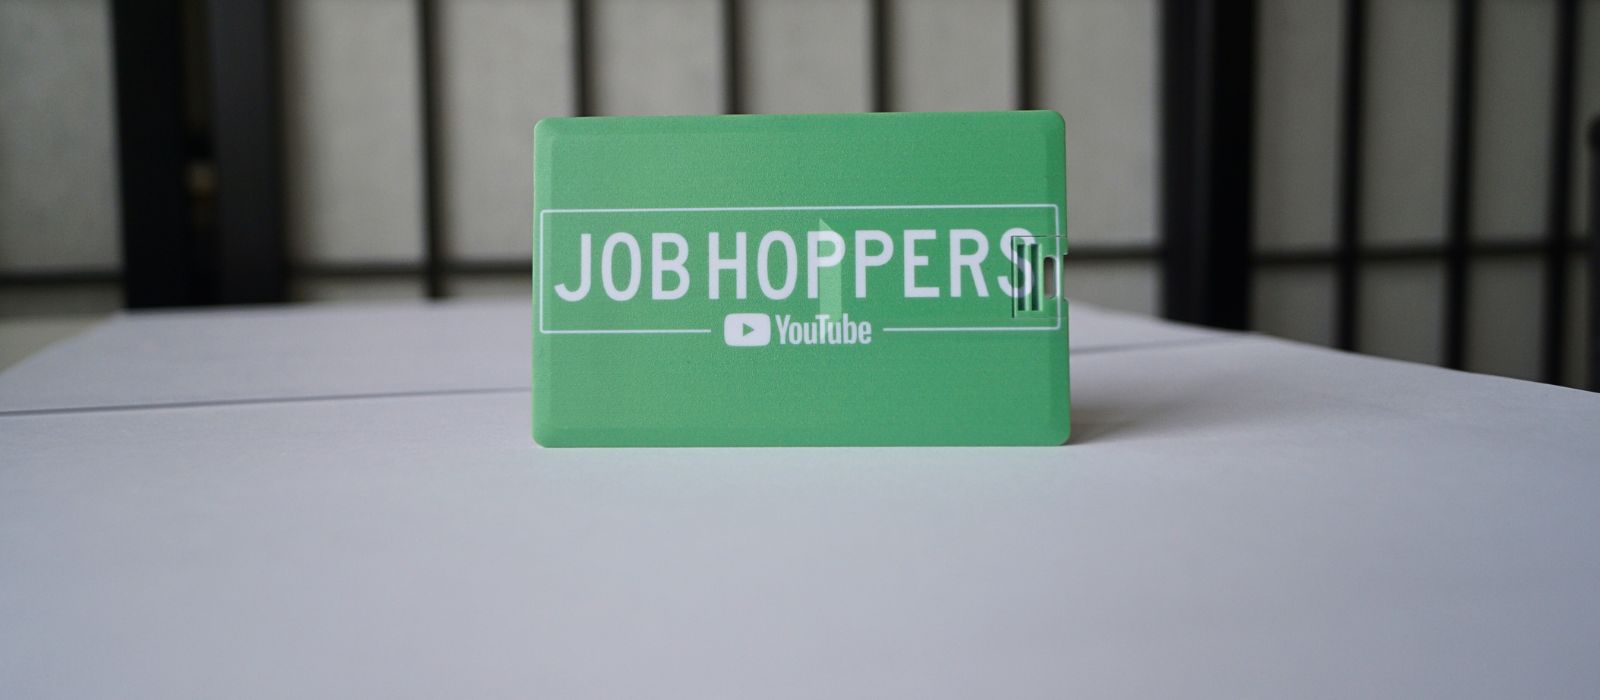 Job Hoppers Usb Business Card Logo